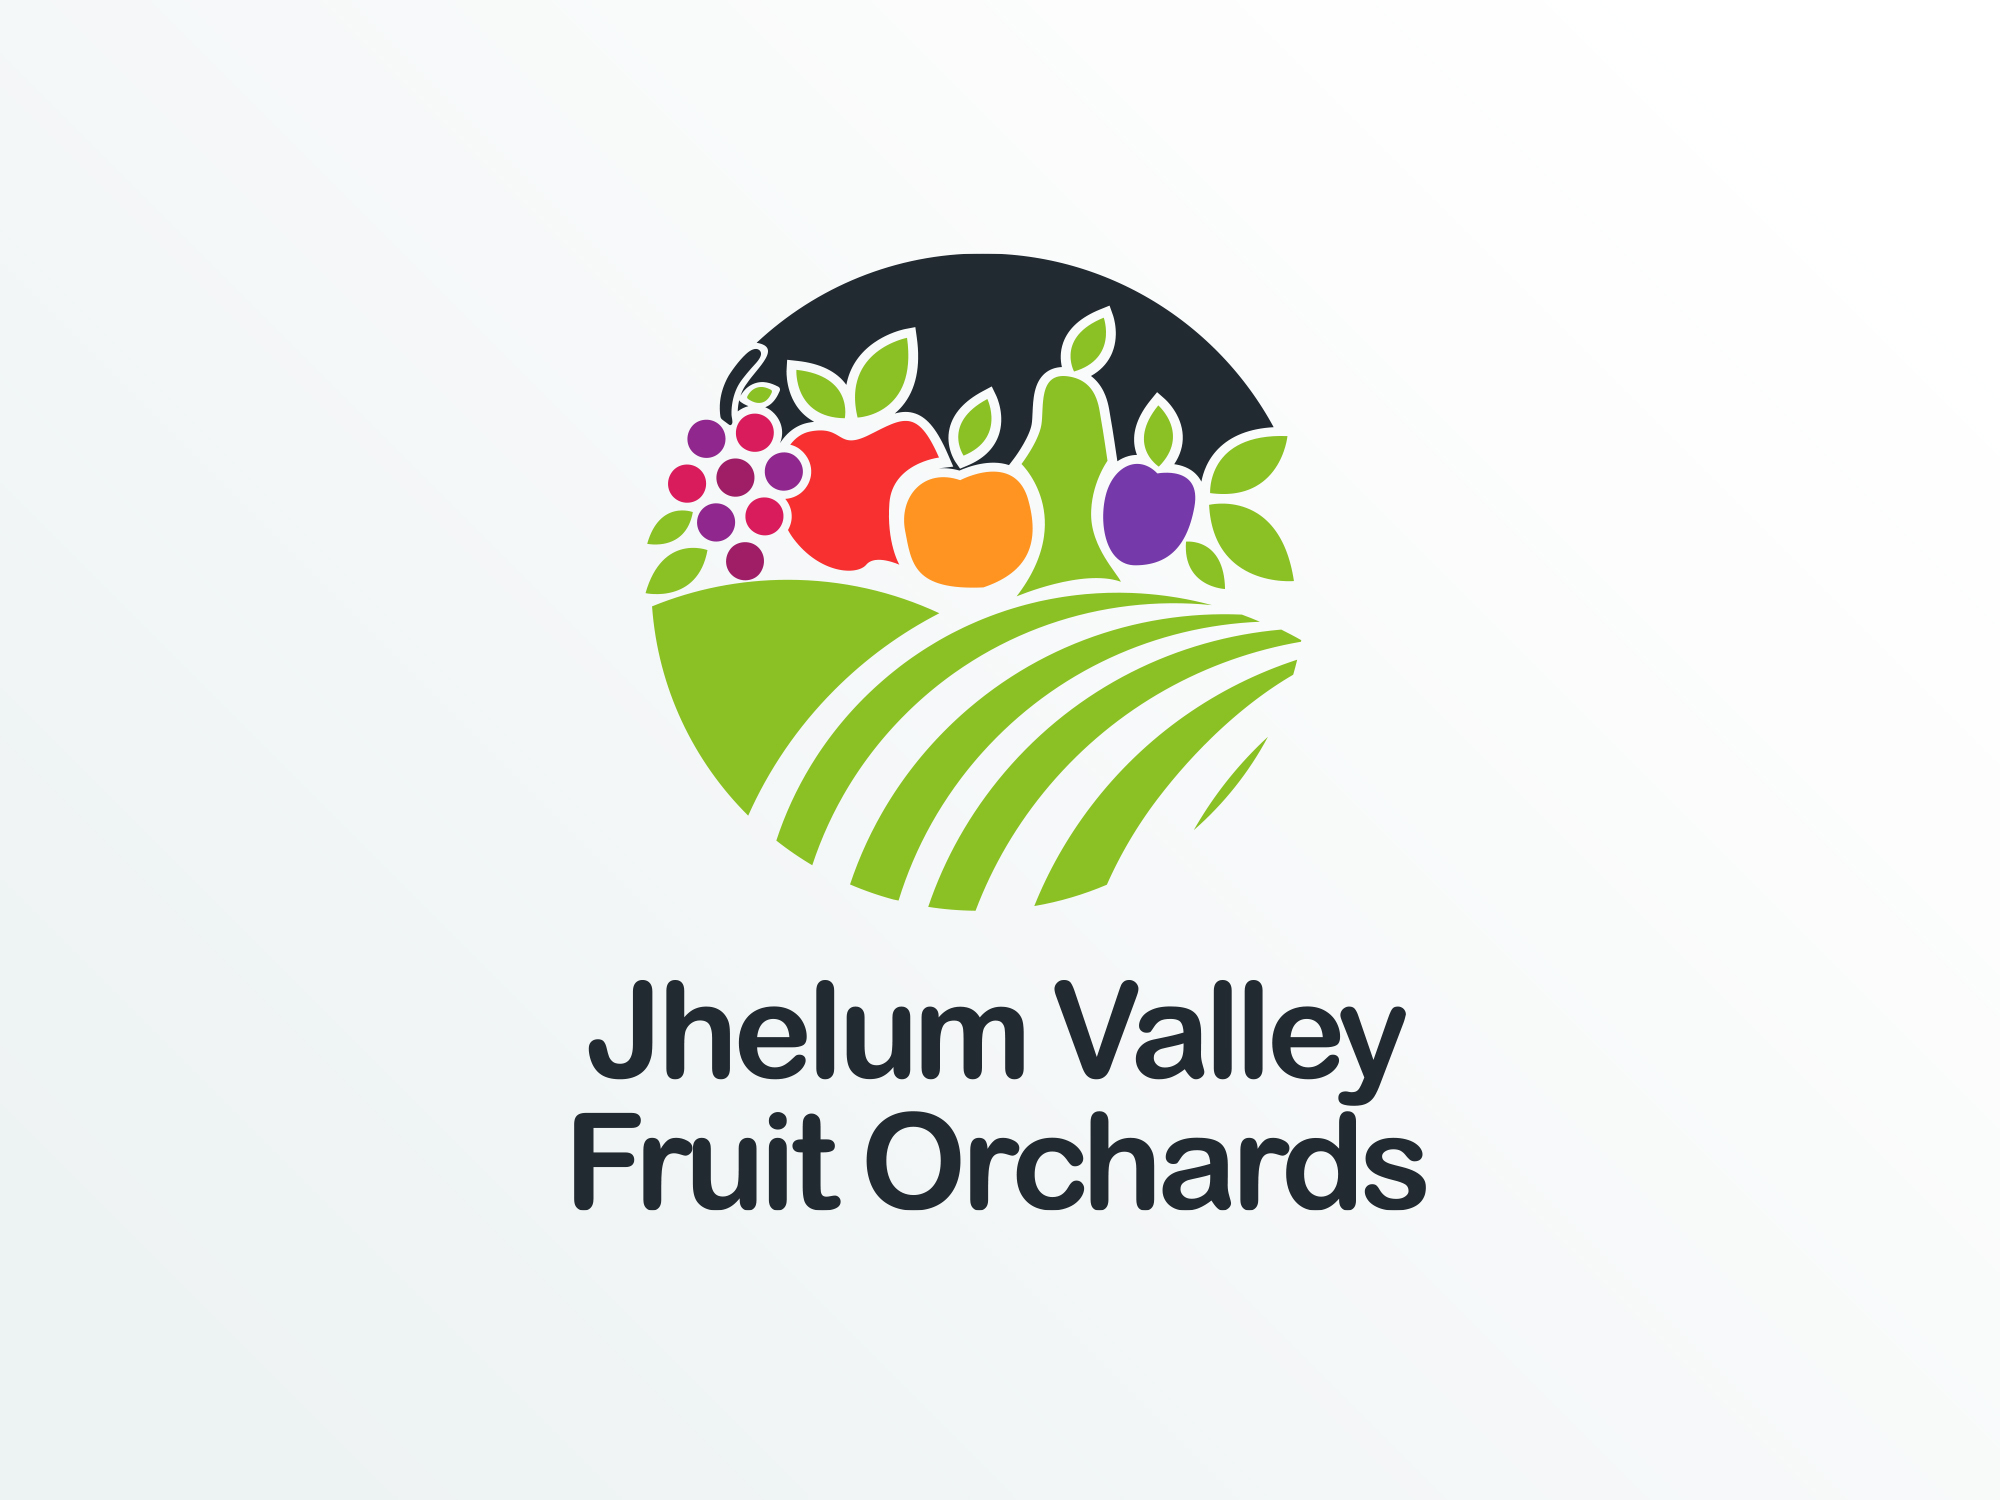 Jhelum Valley Fruit Orchards